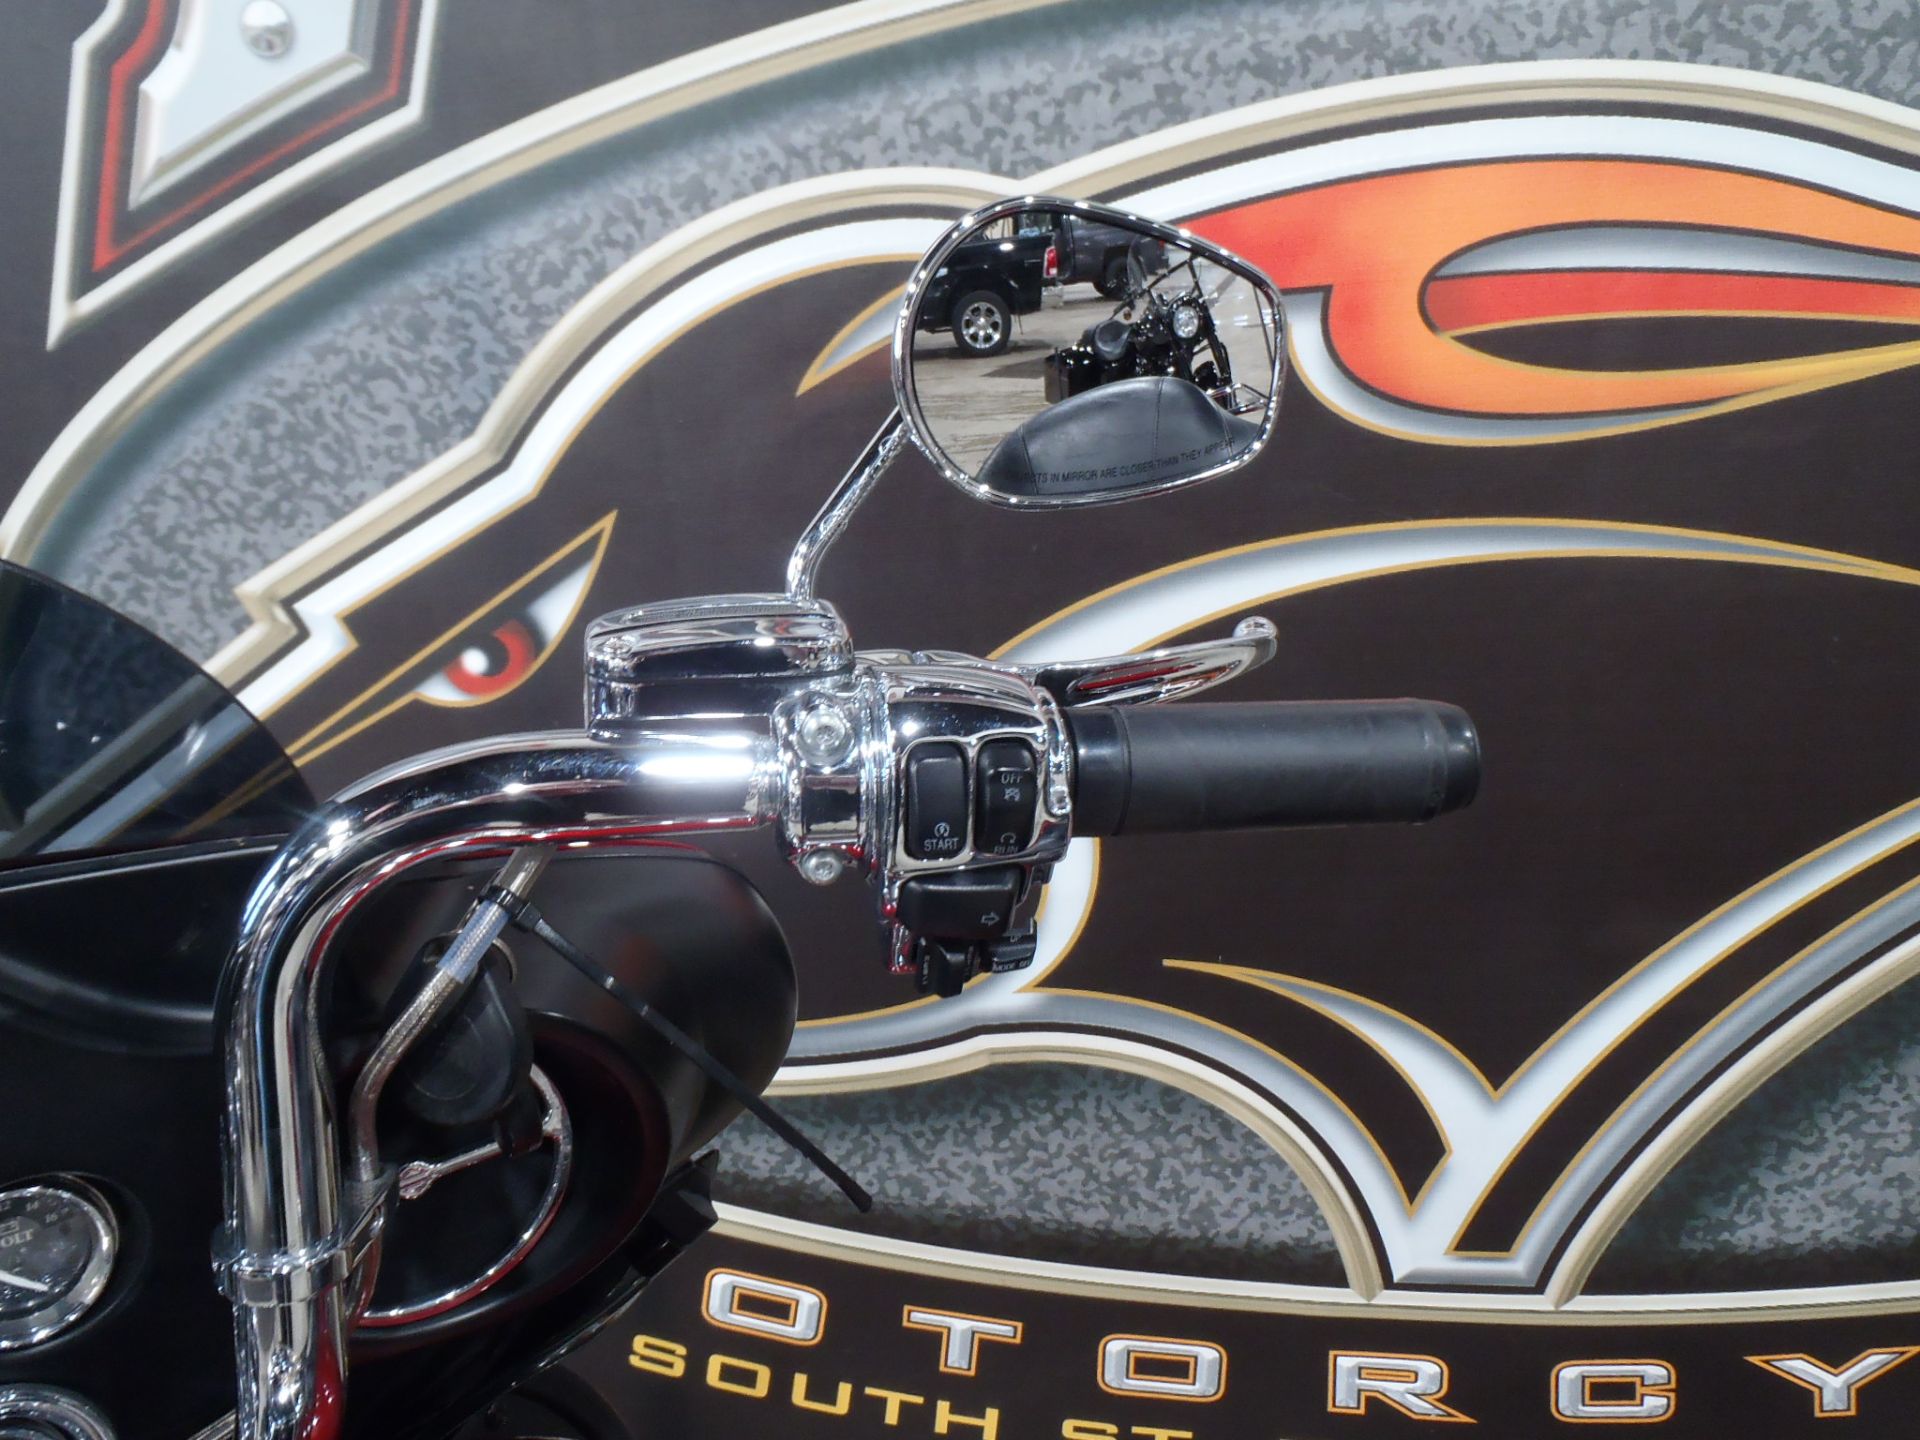 2012 Harley-Davidson Electra Glide® Ultra Limited in South Saint Paul, Minnesota - Photo 23